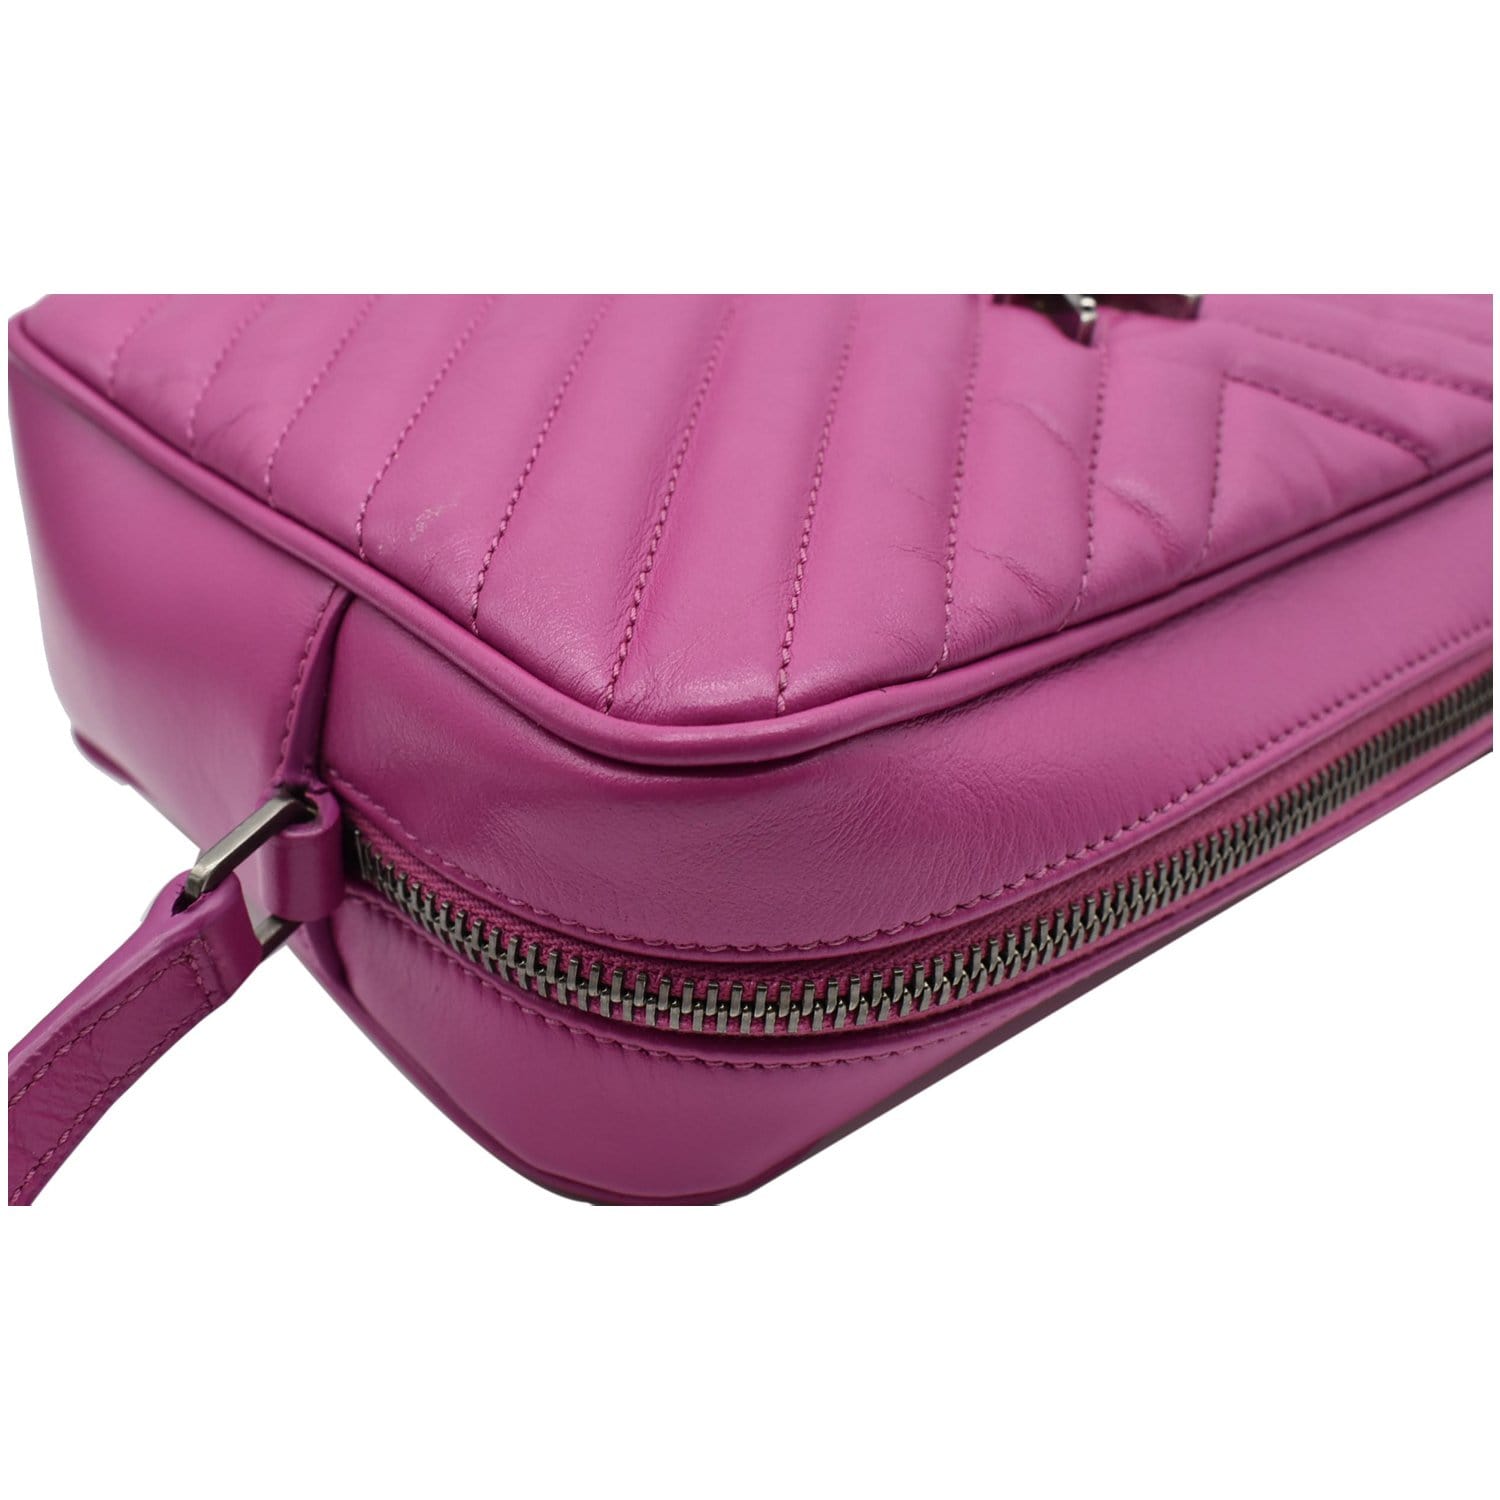 Lou Camera Leather Crossbody Bag in Pink - Saint Laurent